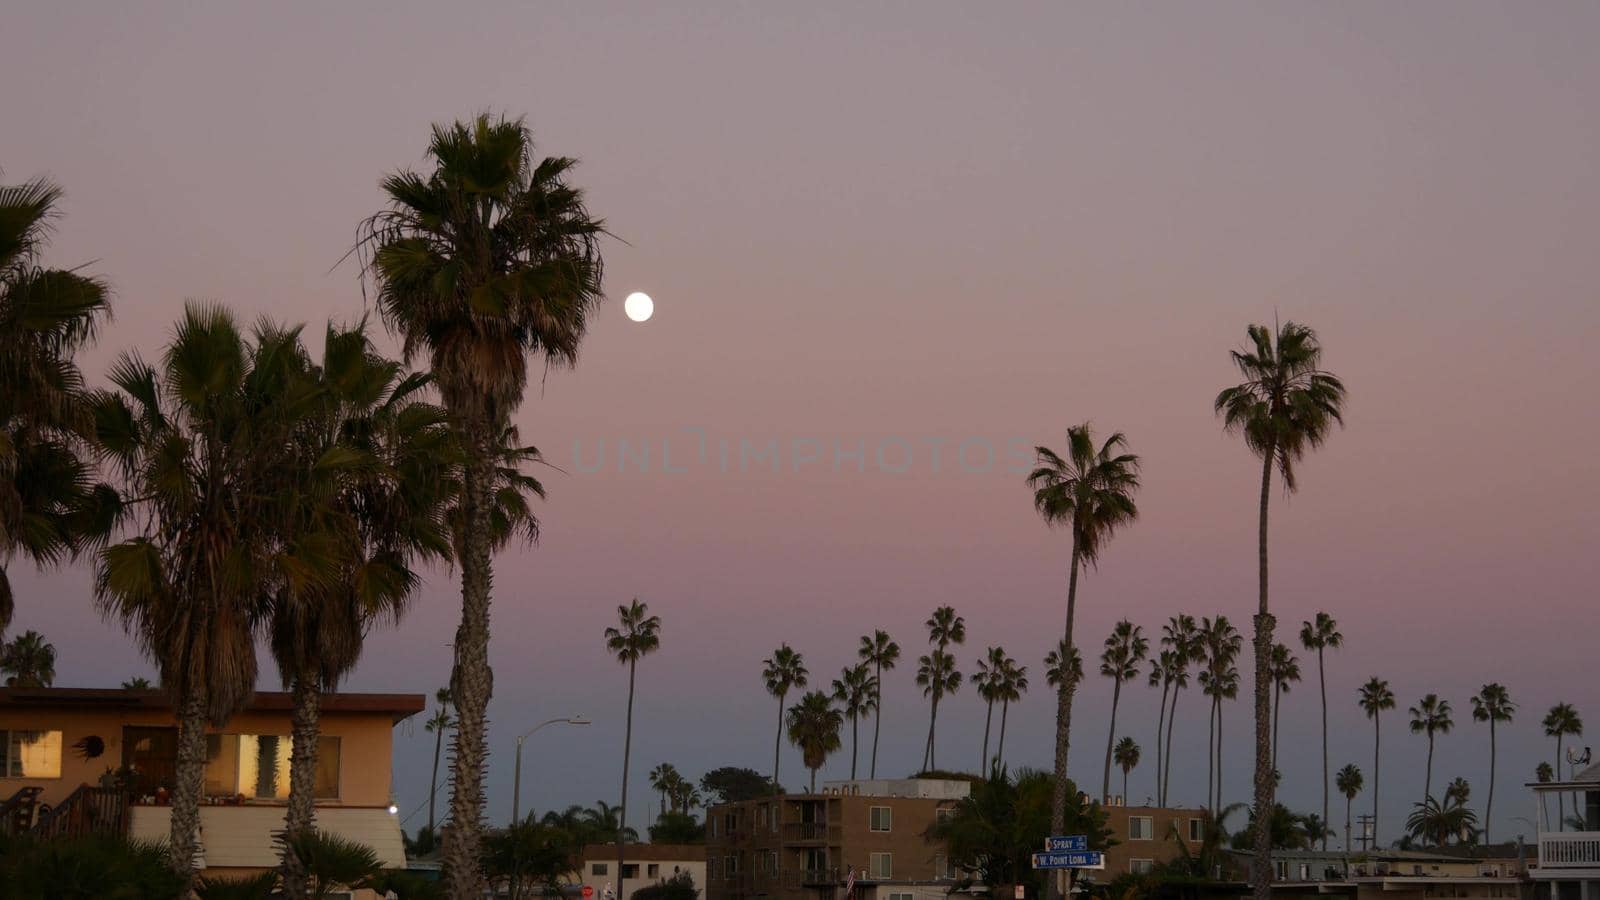 Palm trees silhouettes and full moon in twilight sky, California beach houses. by DogoraSun